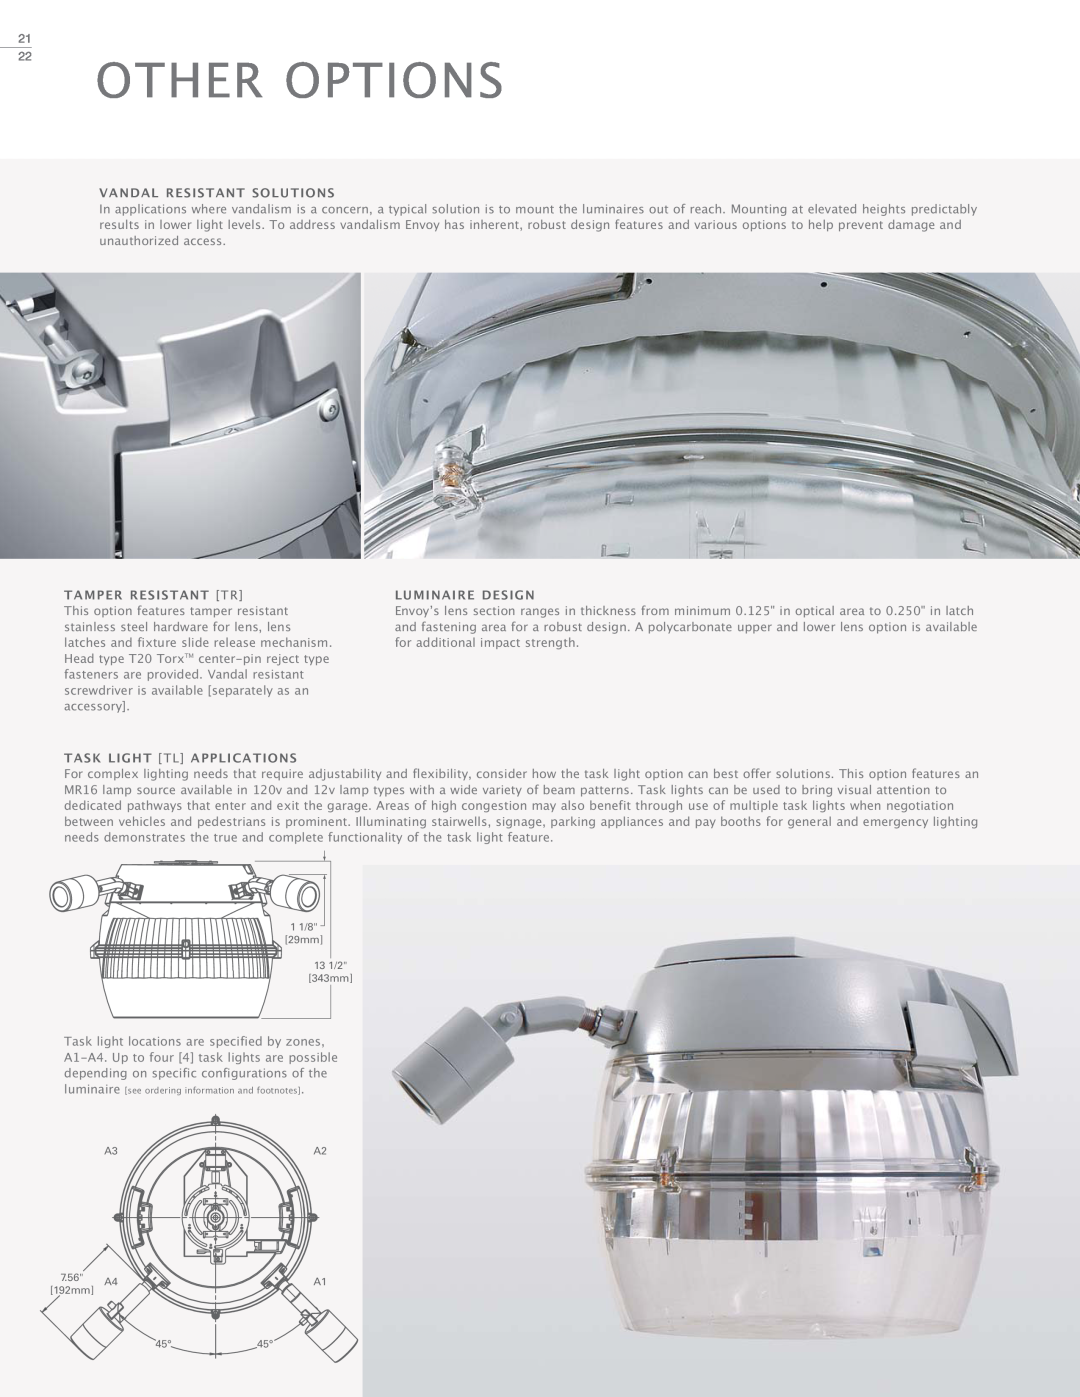 Cooper Lighting Envoy manual Other Options, Vandal Resistant Solutions, Tamper Resistant Tr, Luminaire Design 